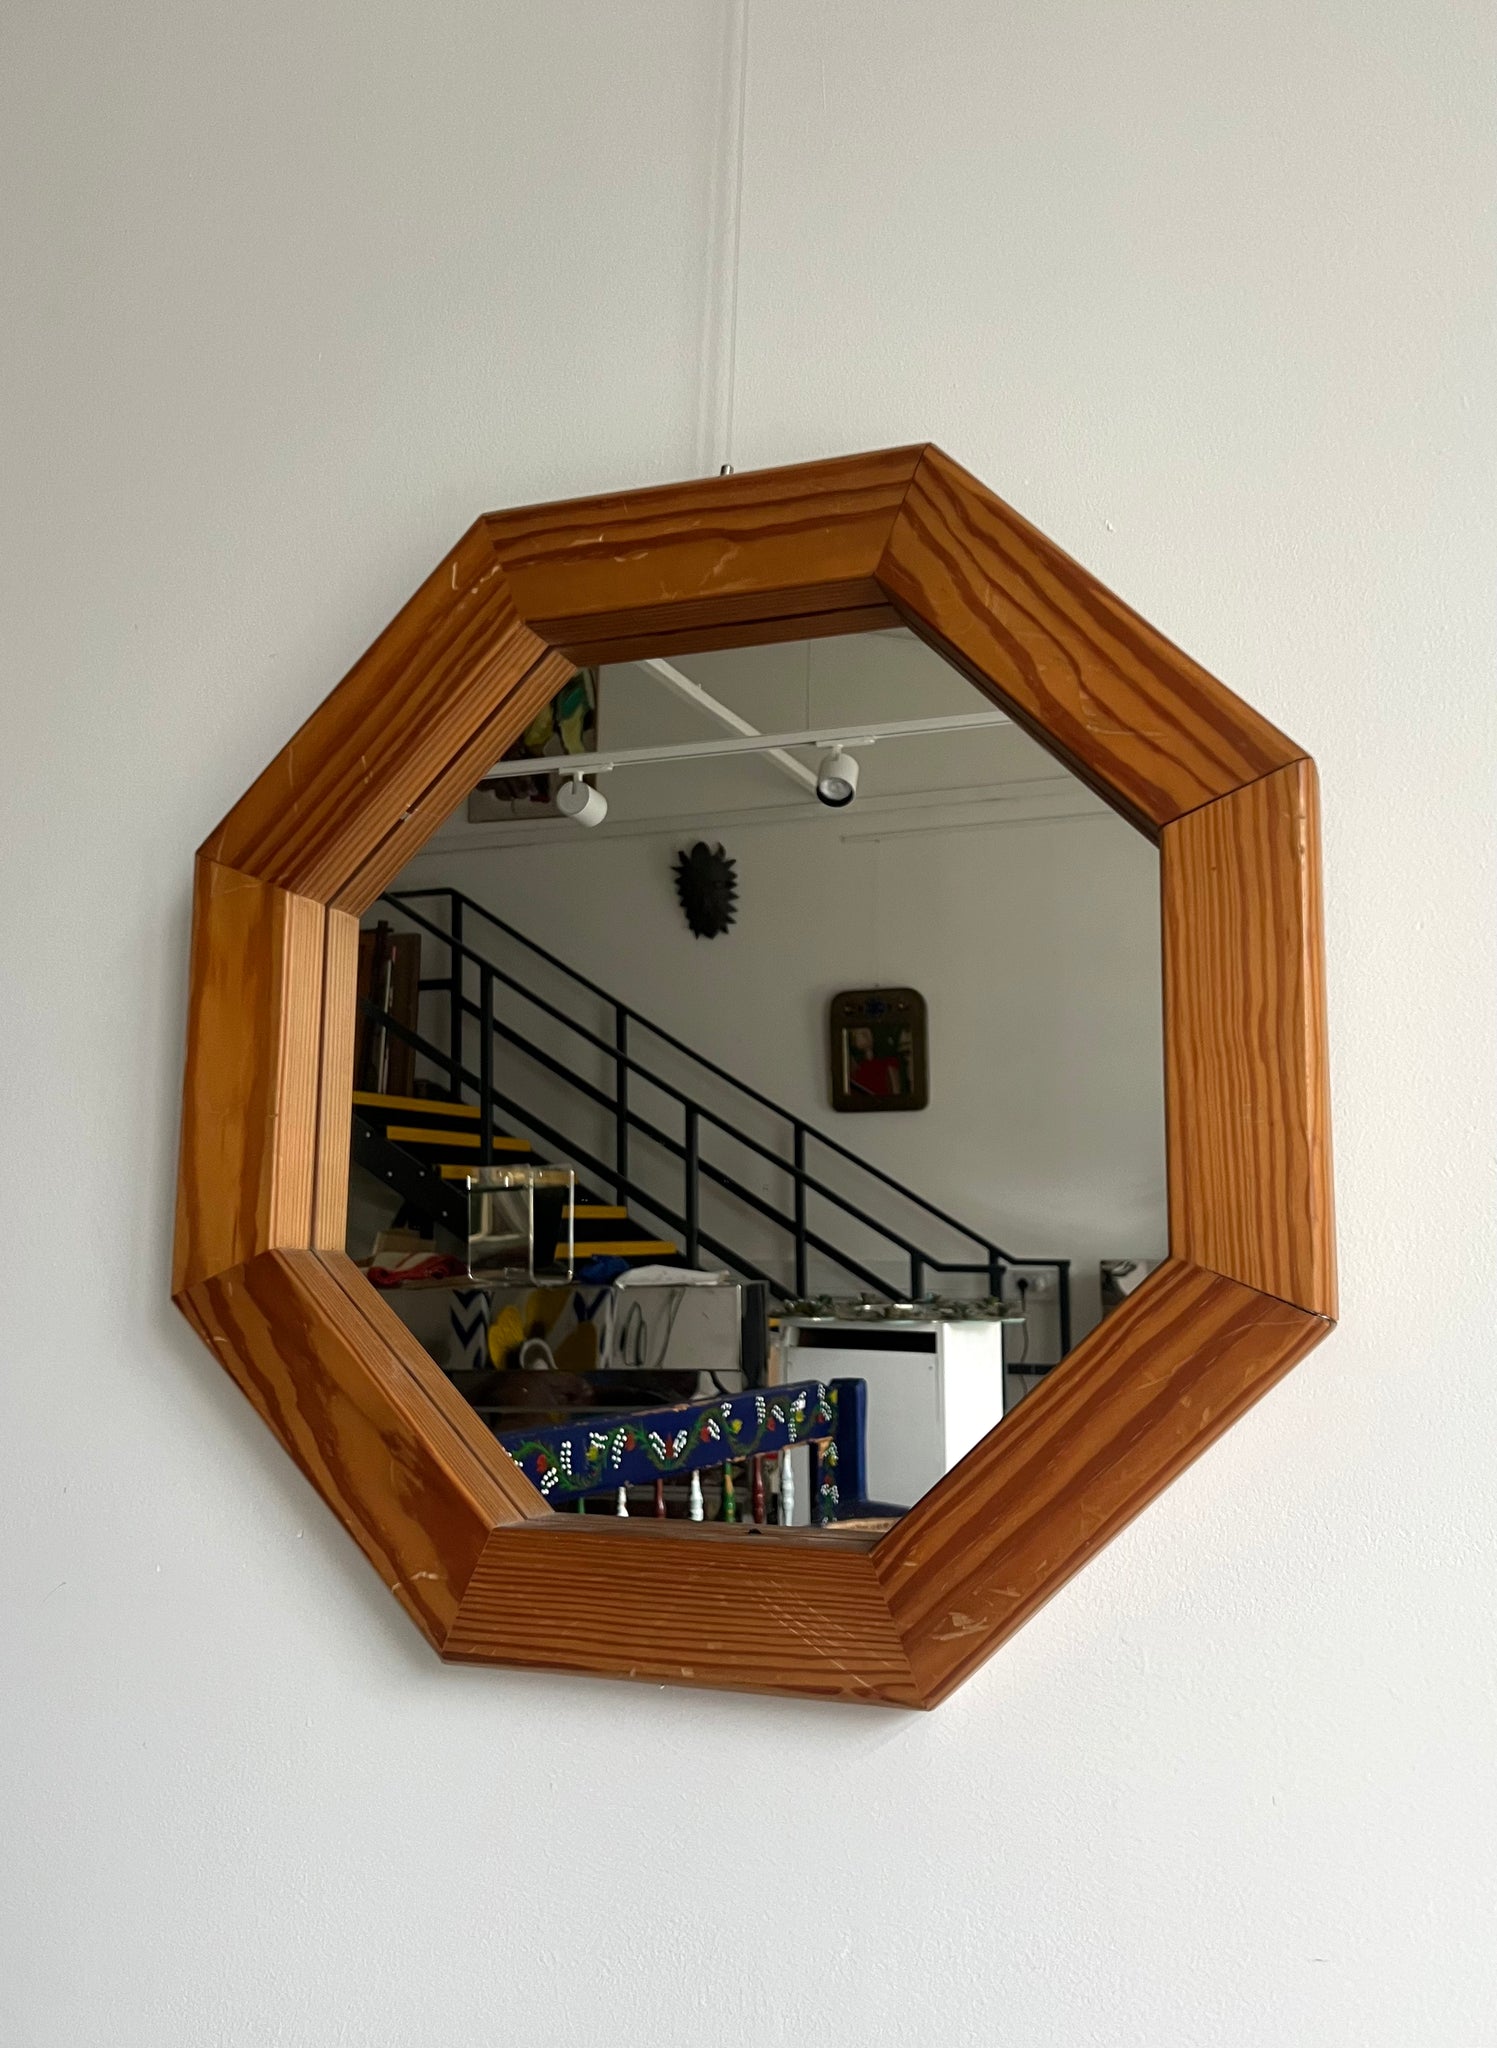 Chunky Octagonal Wooden Mirror